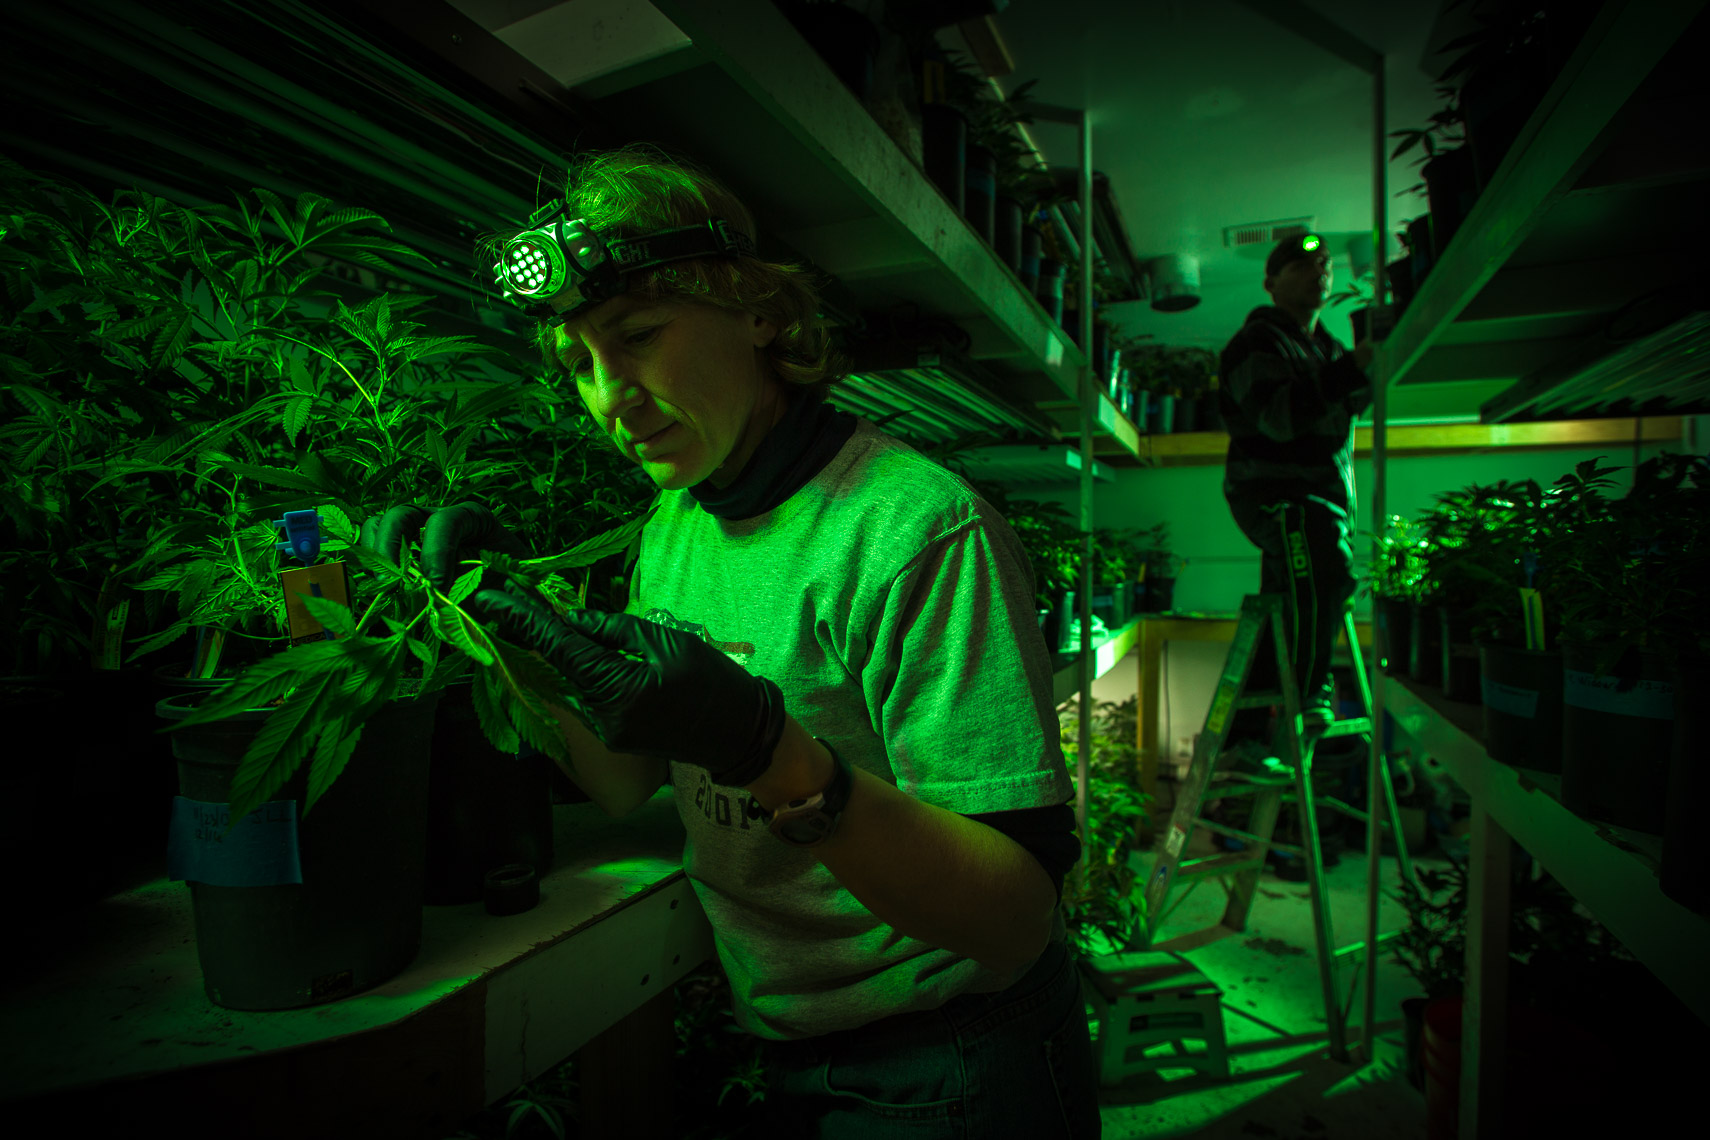 green lights used to inspect cannabis marijuana plants at night